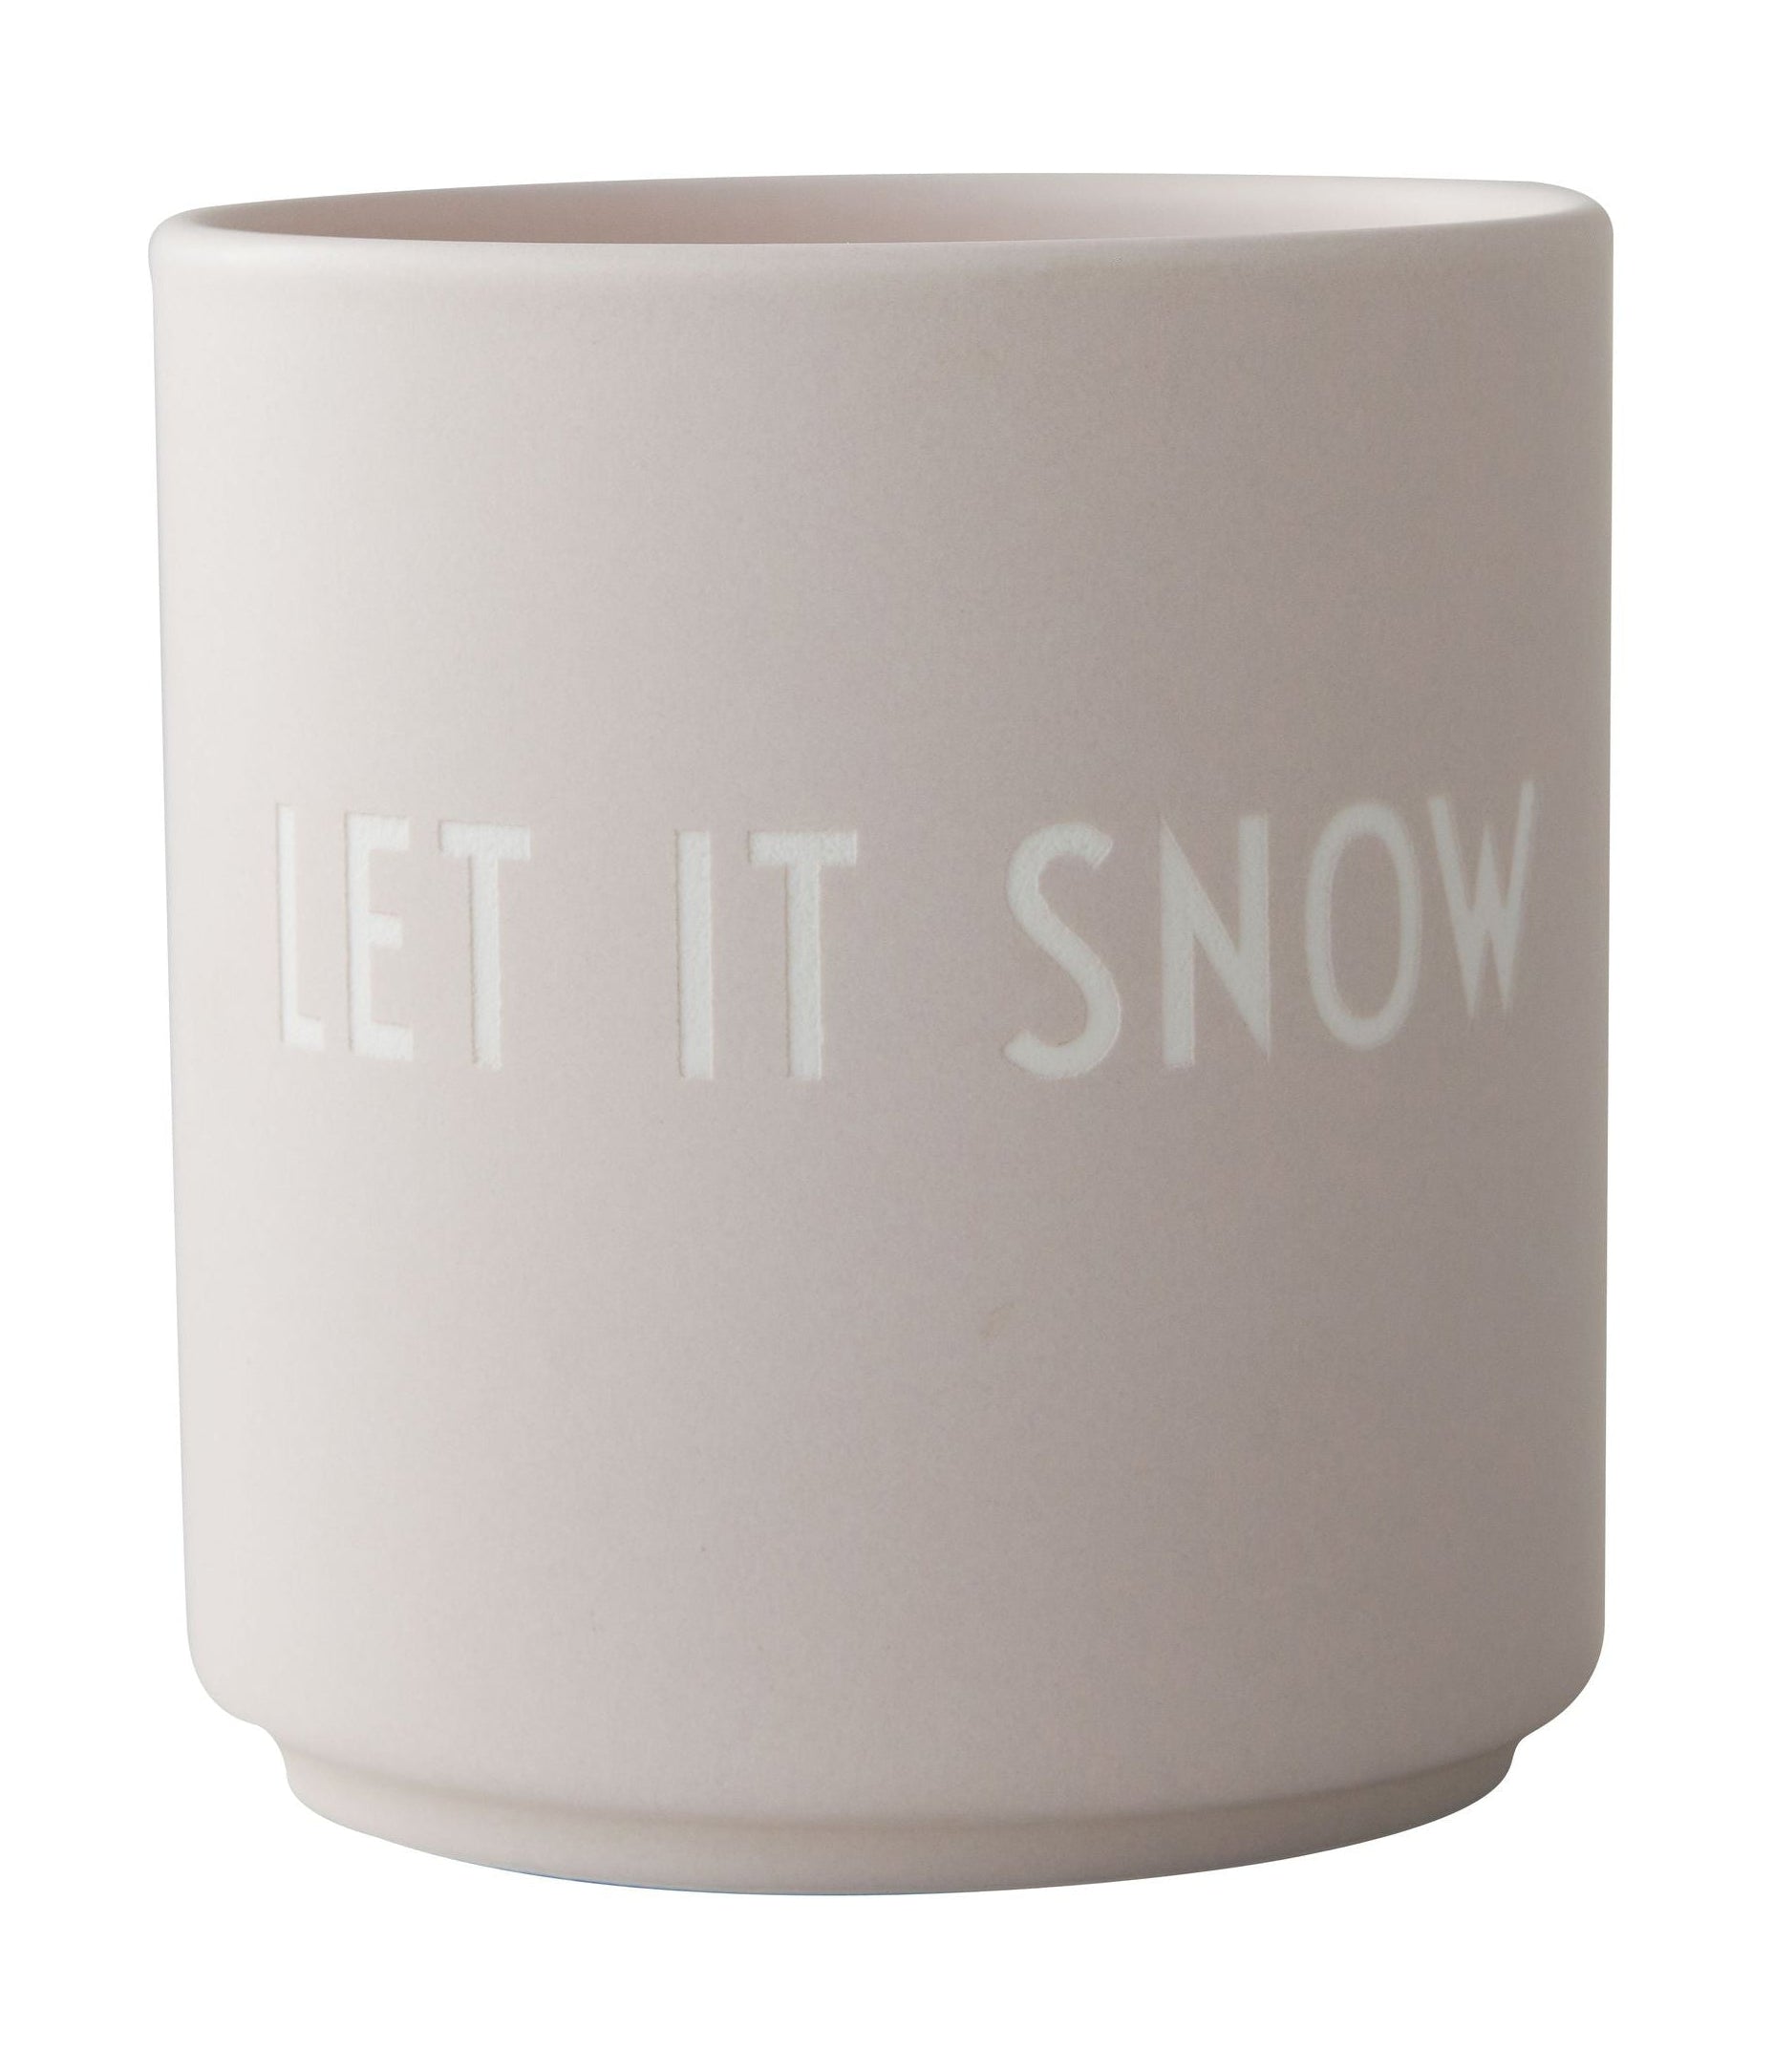 Design Letters Favorit kopp låt det snö, pastell beige